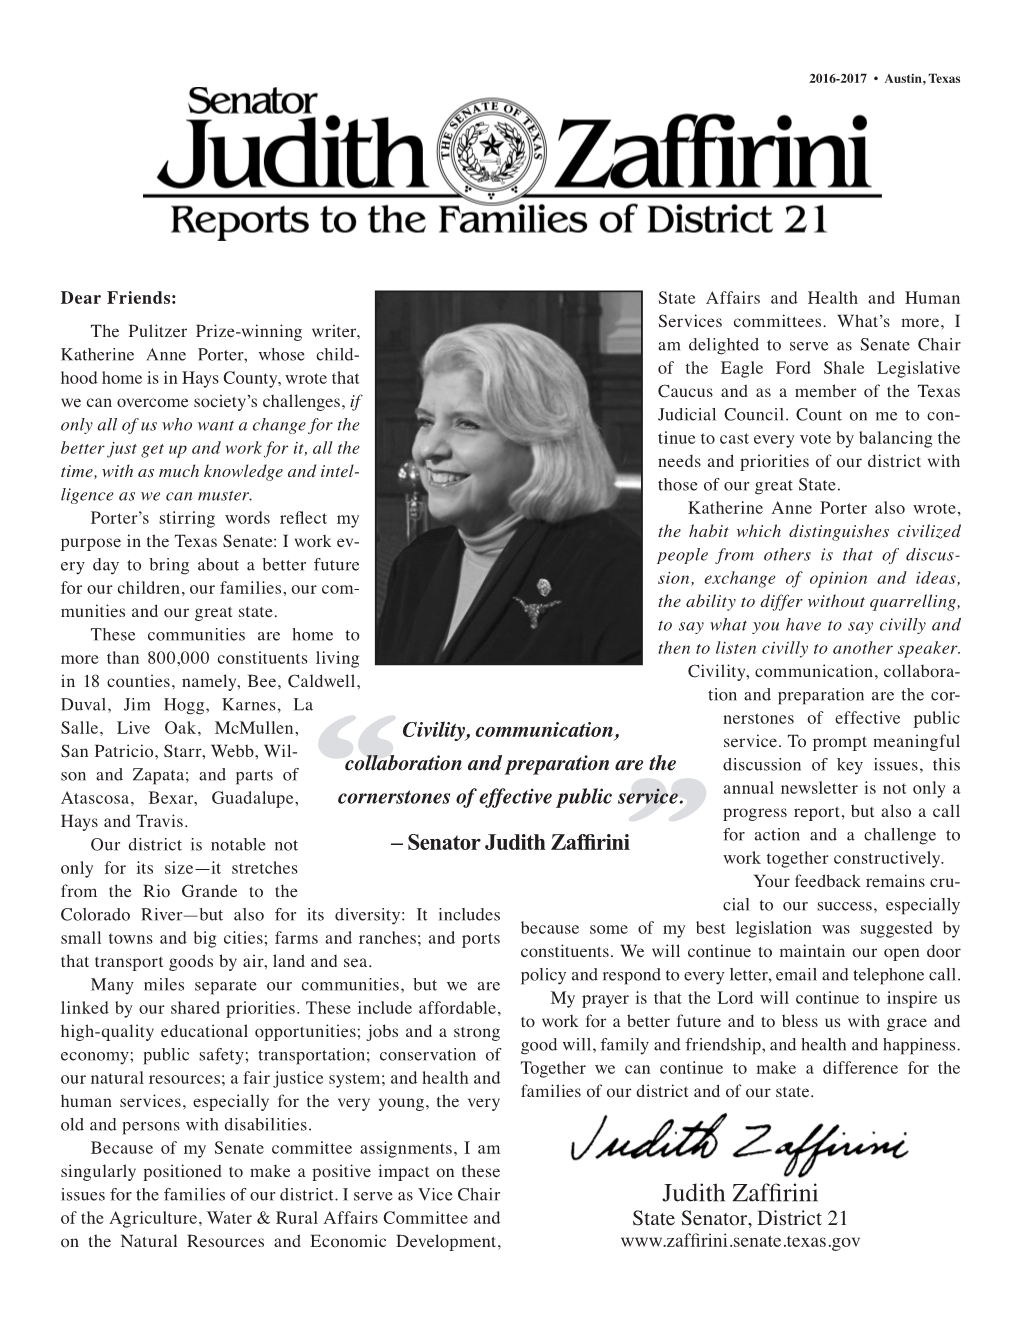 Judith Zaffirini Work Together Constructively